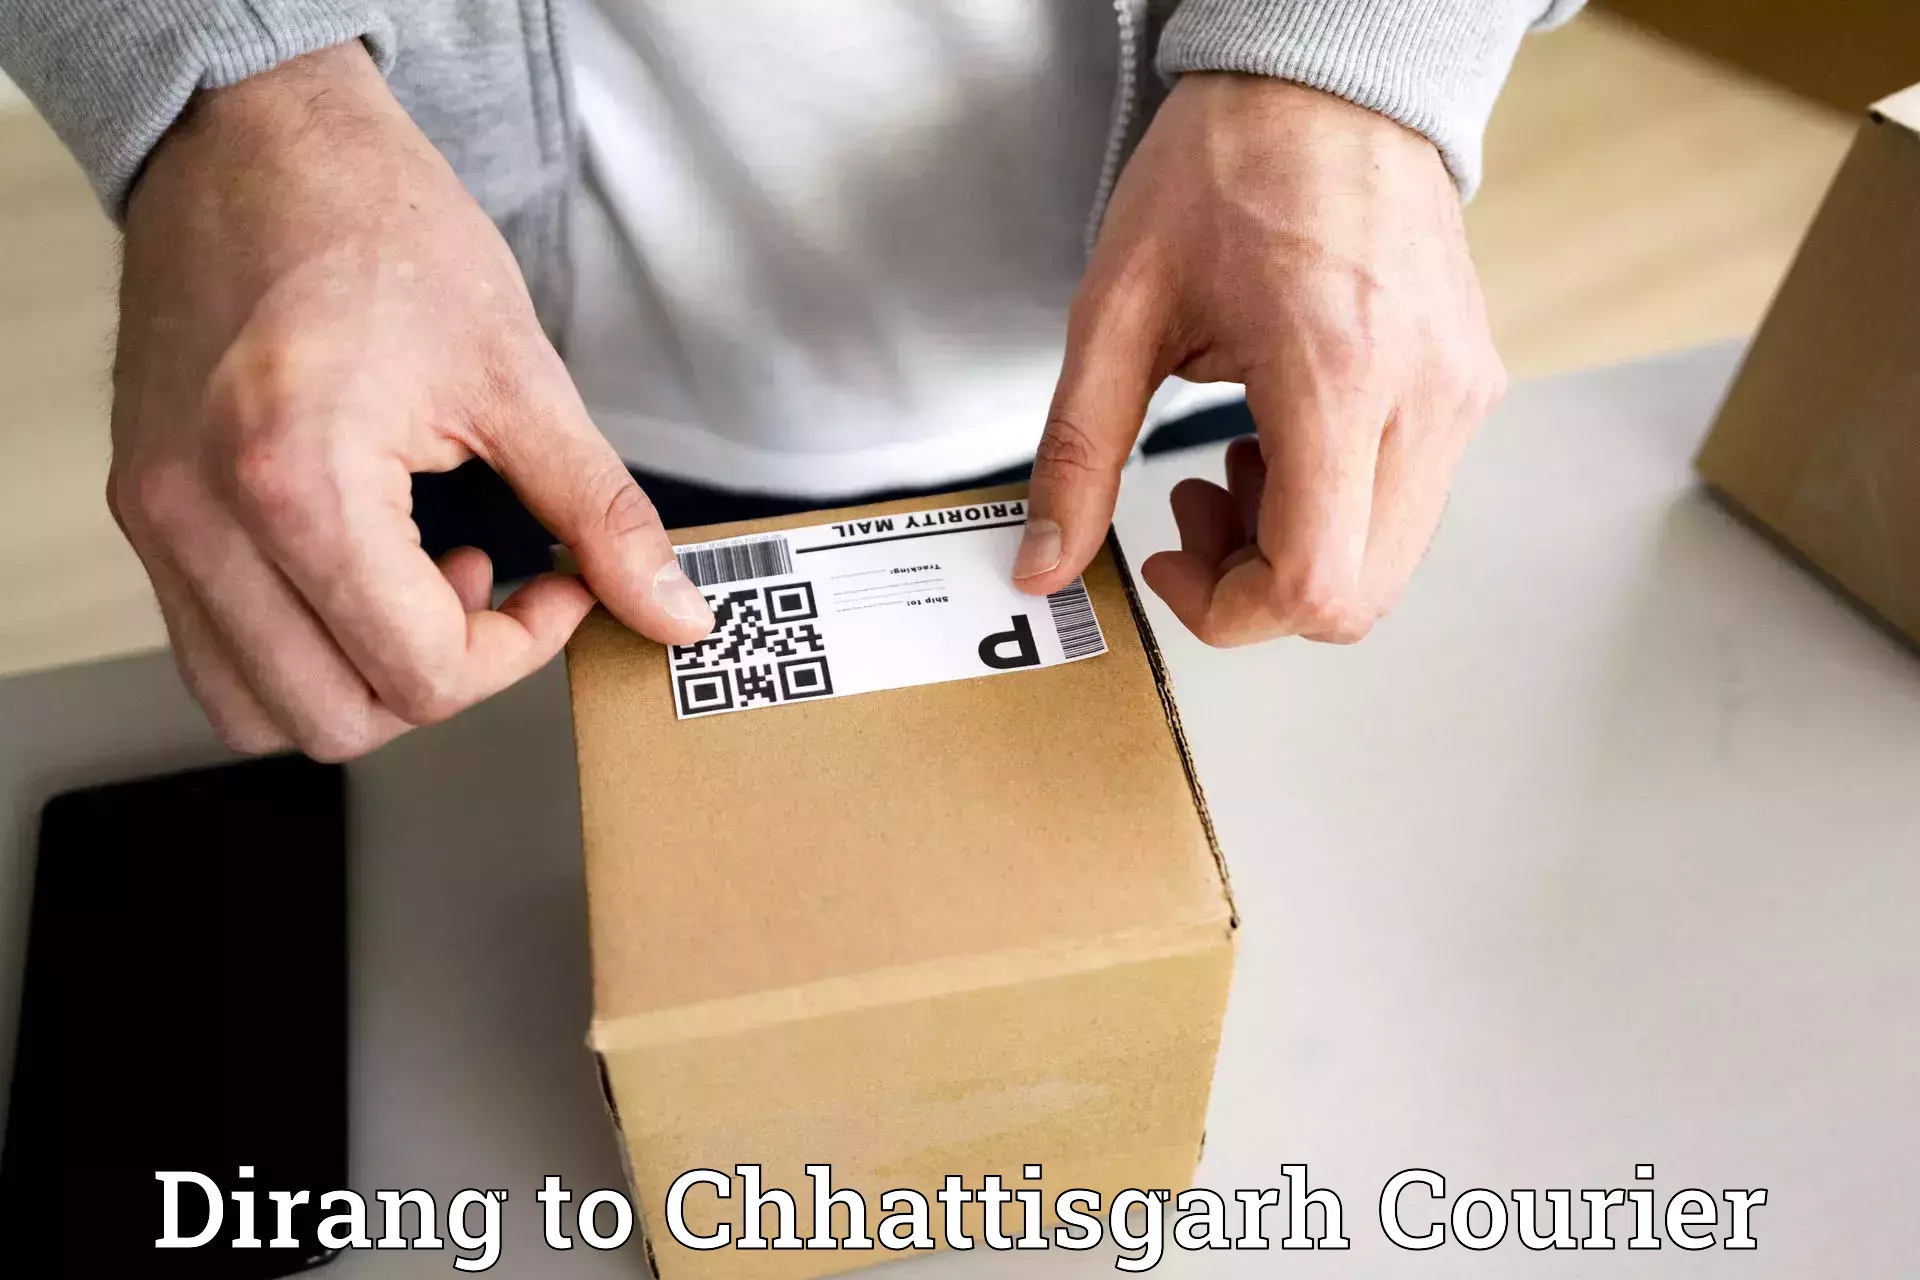 Reliable courier service in Dirang to Patna Chhattisgarh